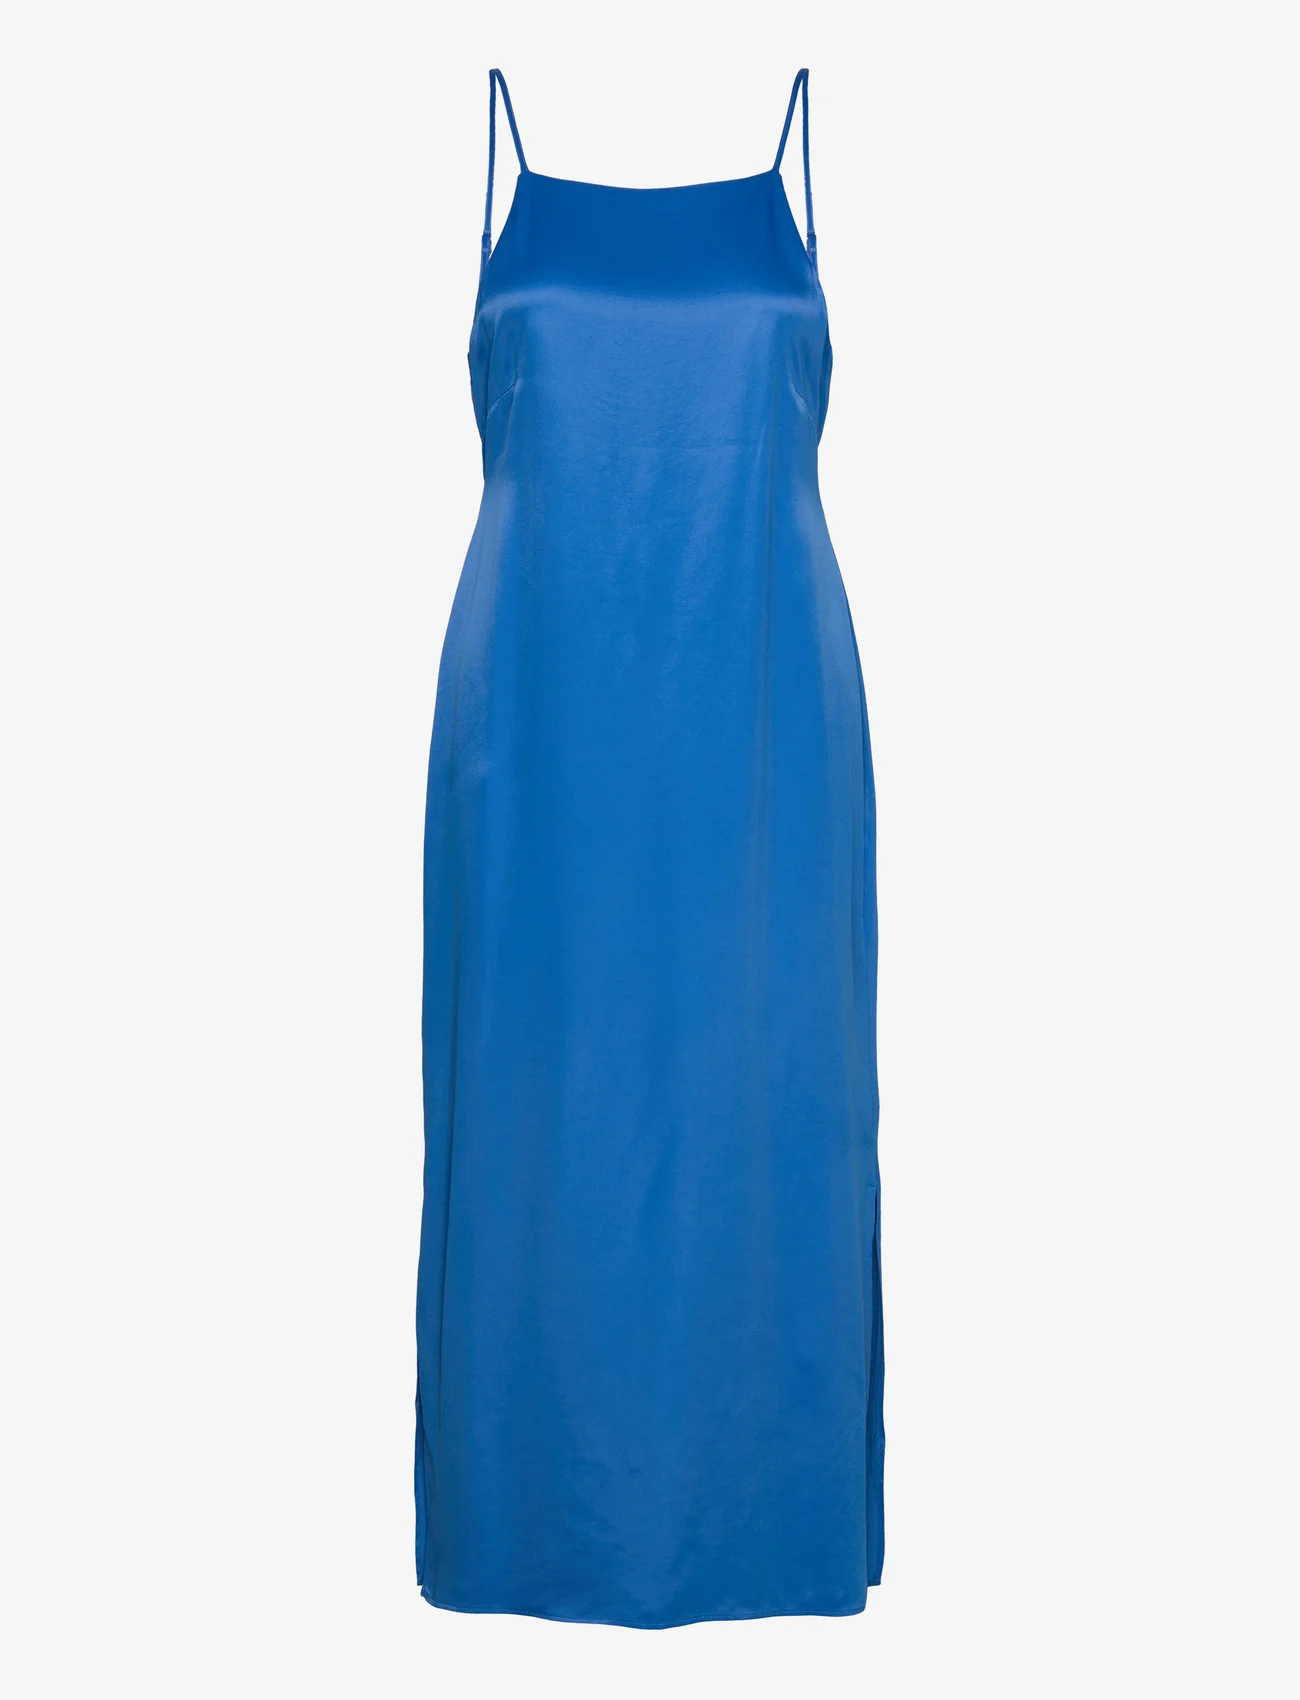 NORR - Portia maxi strap dress - schlupfkleider - strong blue - 0